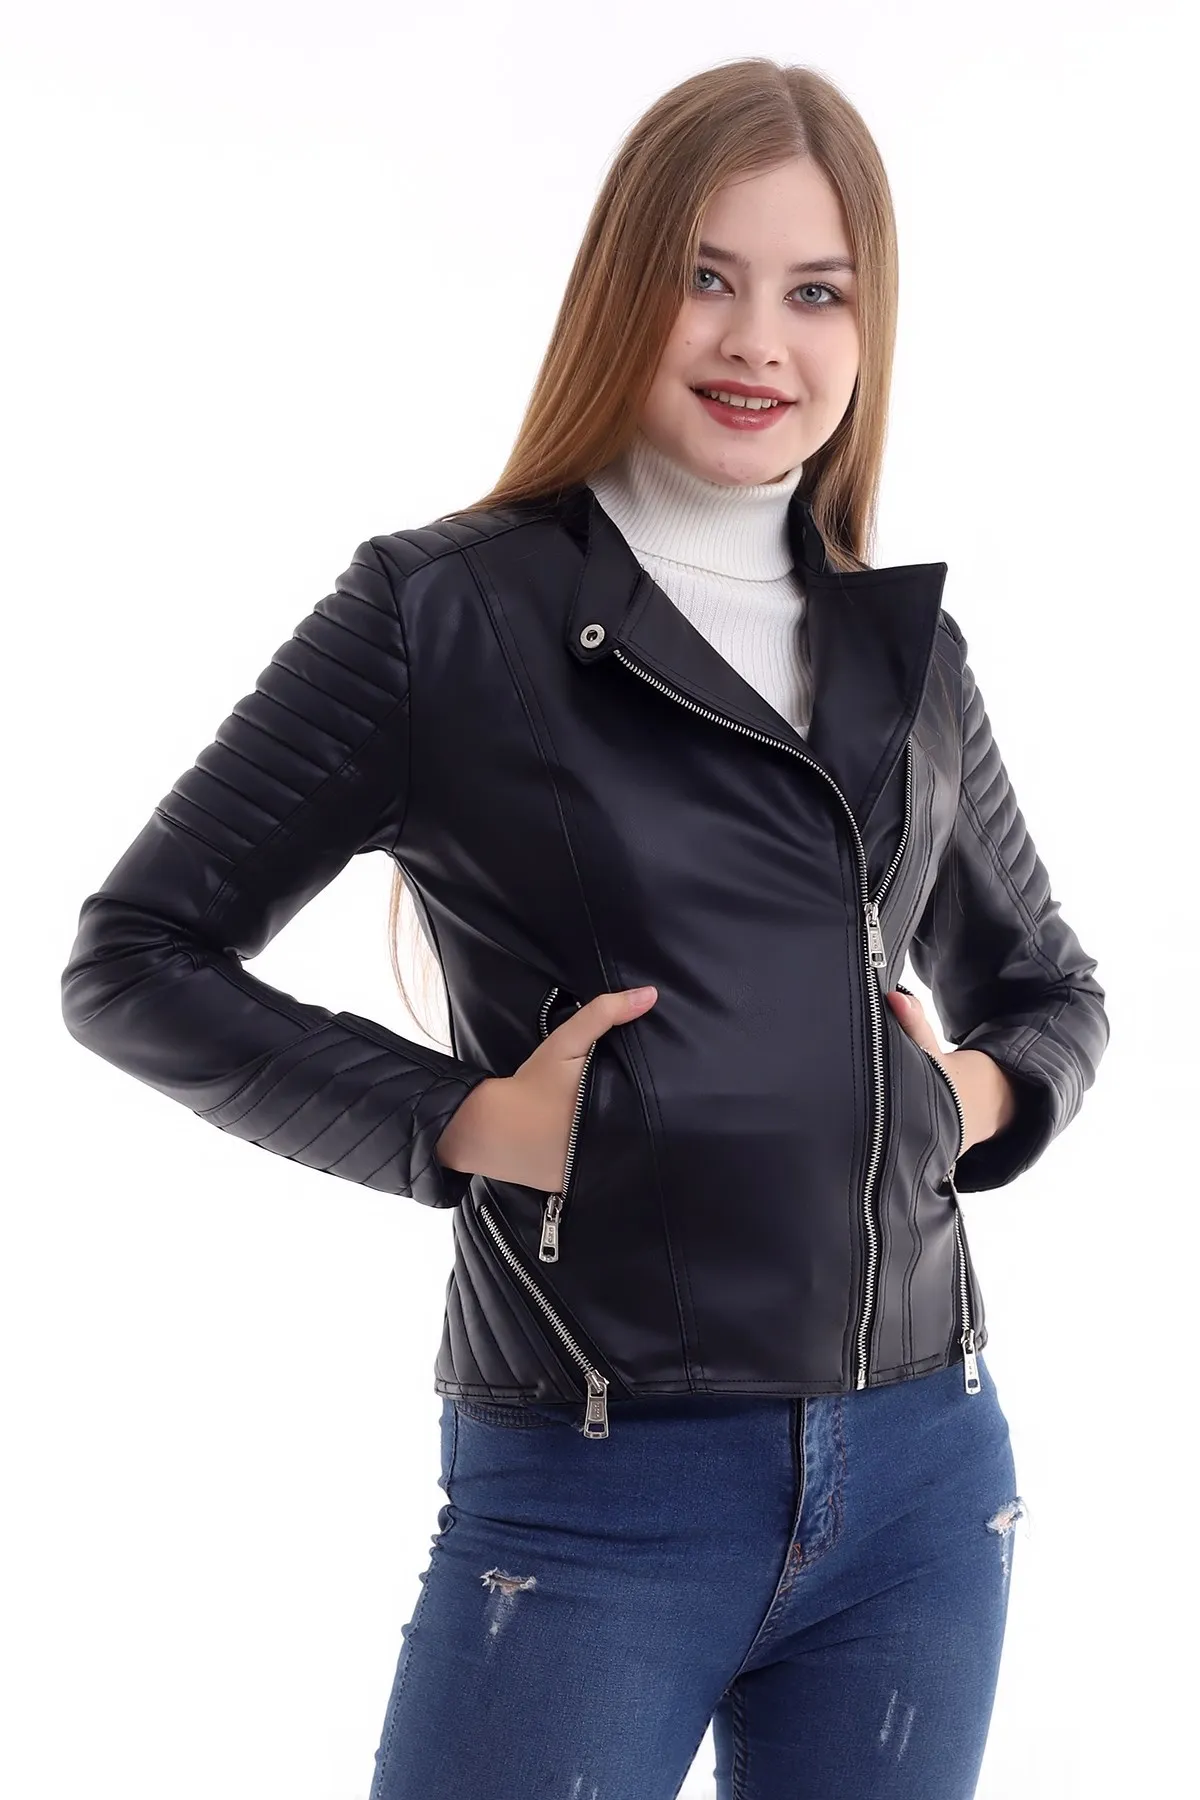 Enlarge Side Zipper Women 'S Leather Jacket Coat Black CRB7504S